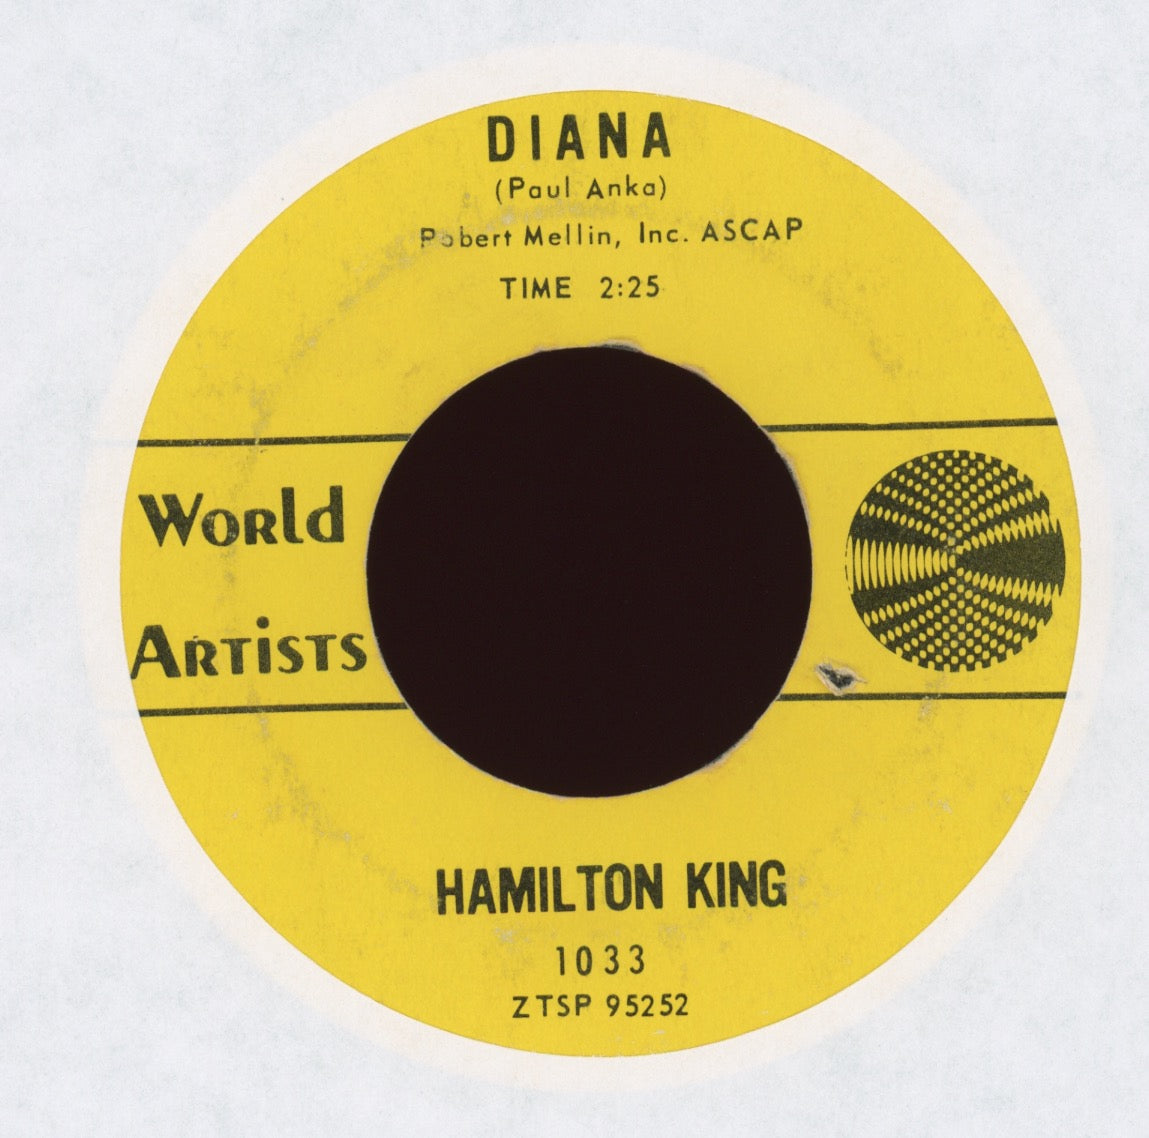 Hamilton King - Diana on World Artists